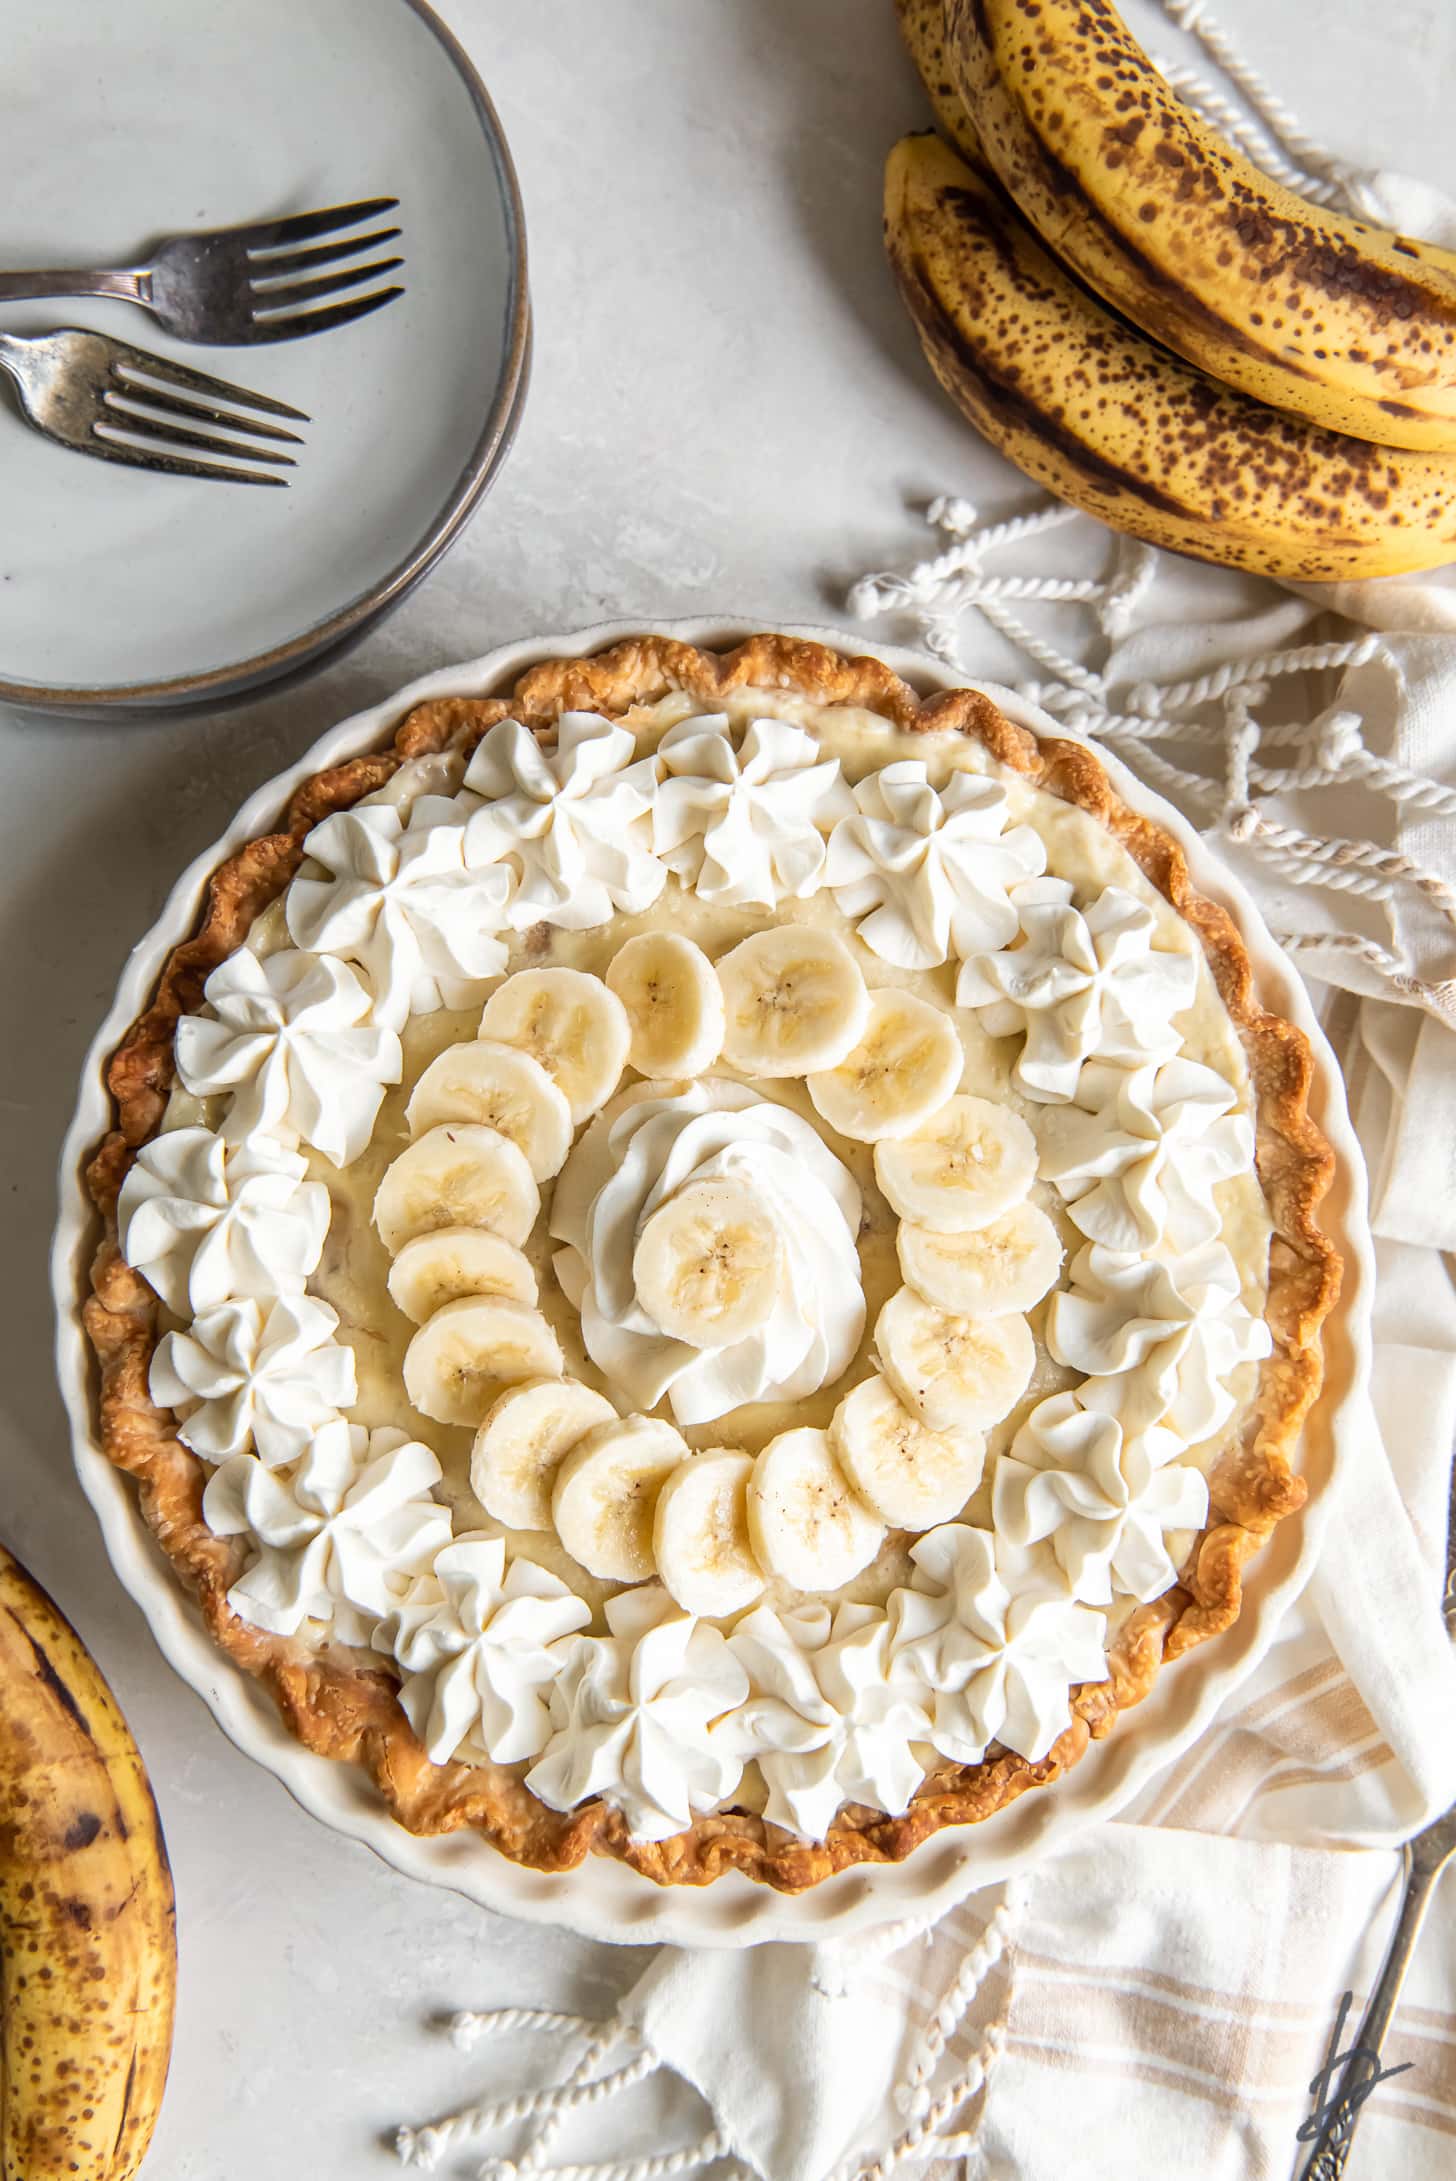 banana cream pie garnished with whipped cream and banana slices 